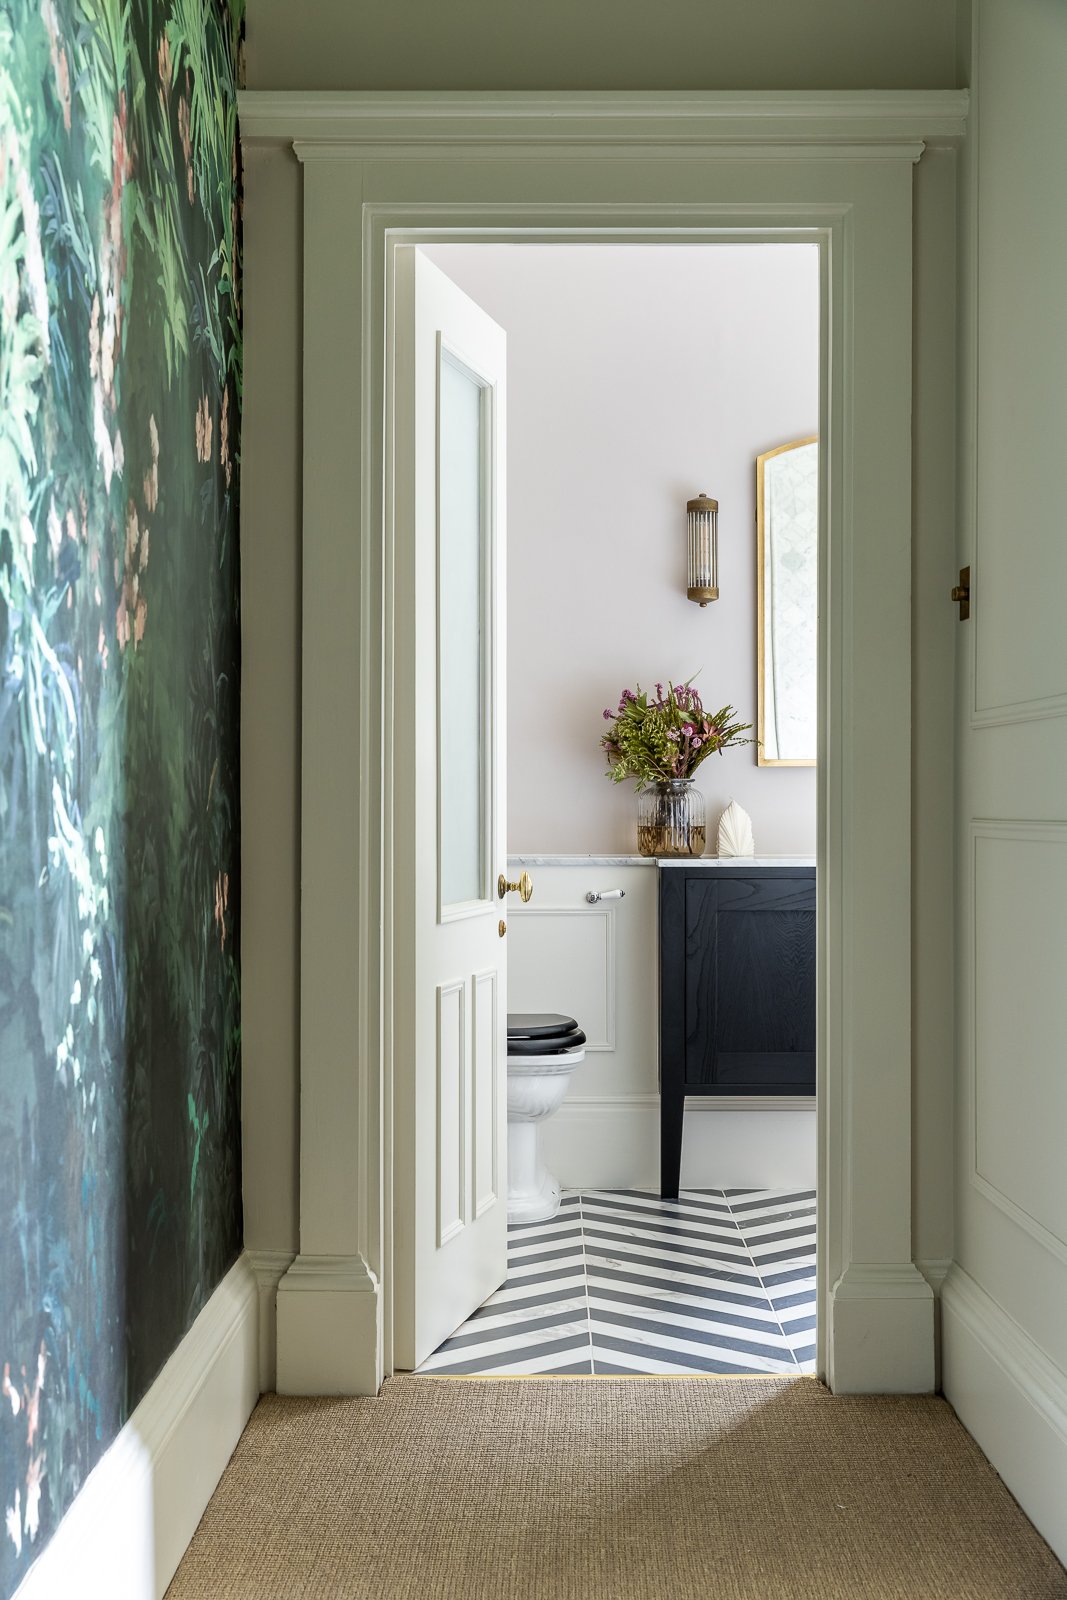 CharlotteBucciero-interiors-mural-wallpaper-floral-deco-chevron-tiles-toilet.jpg